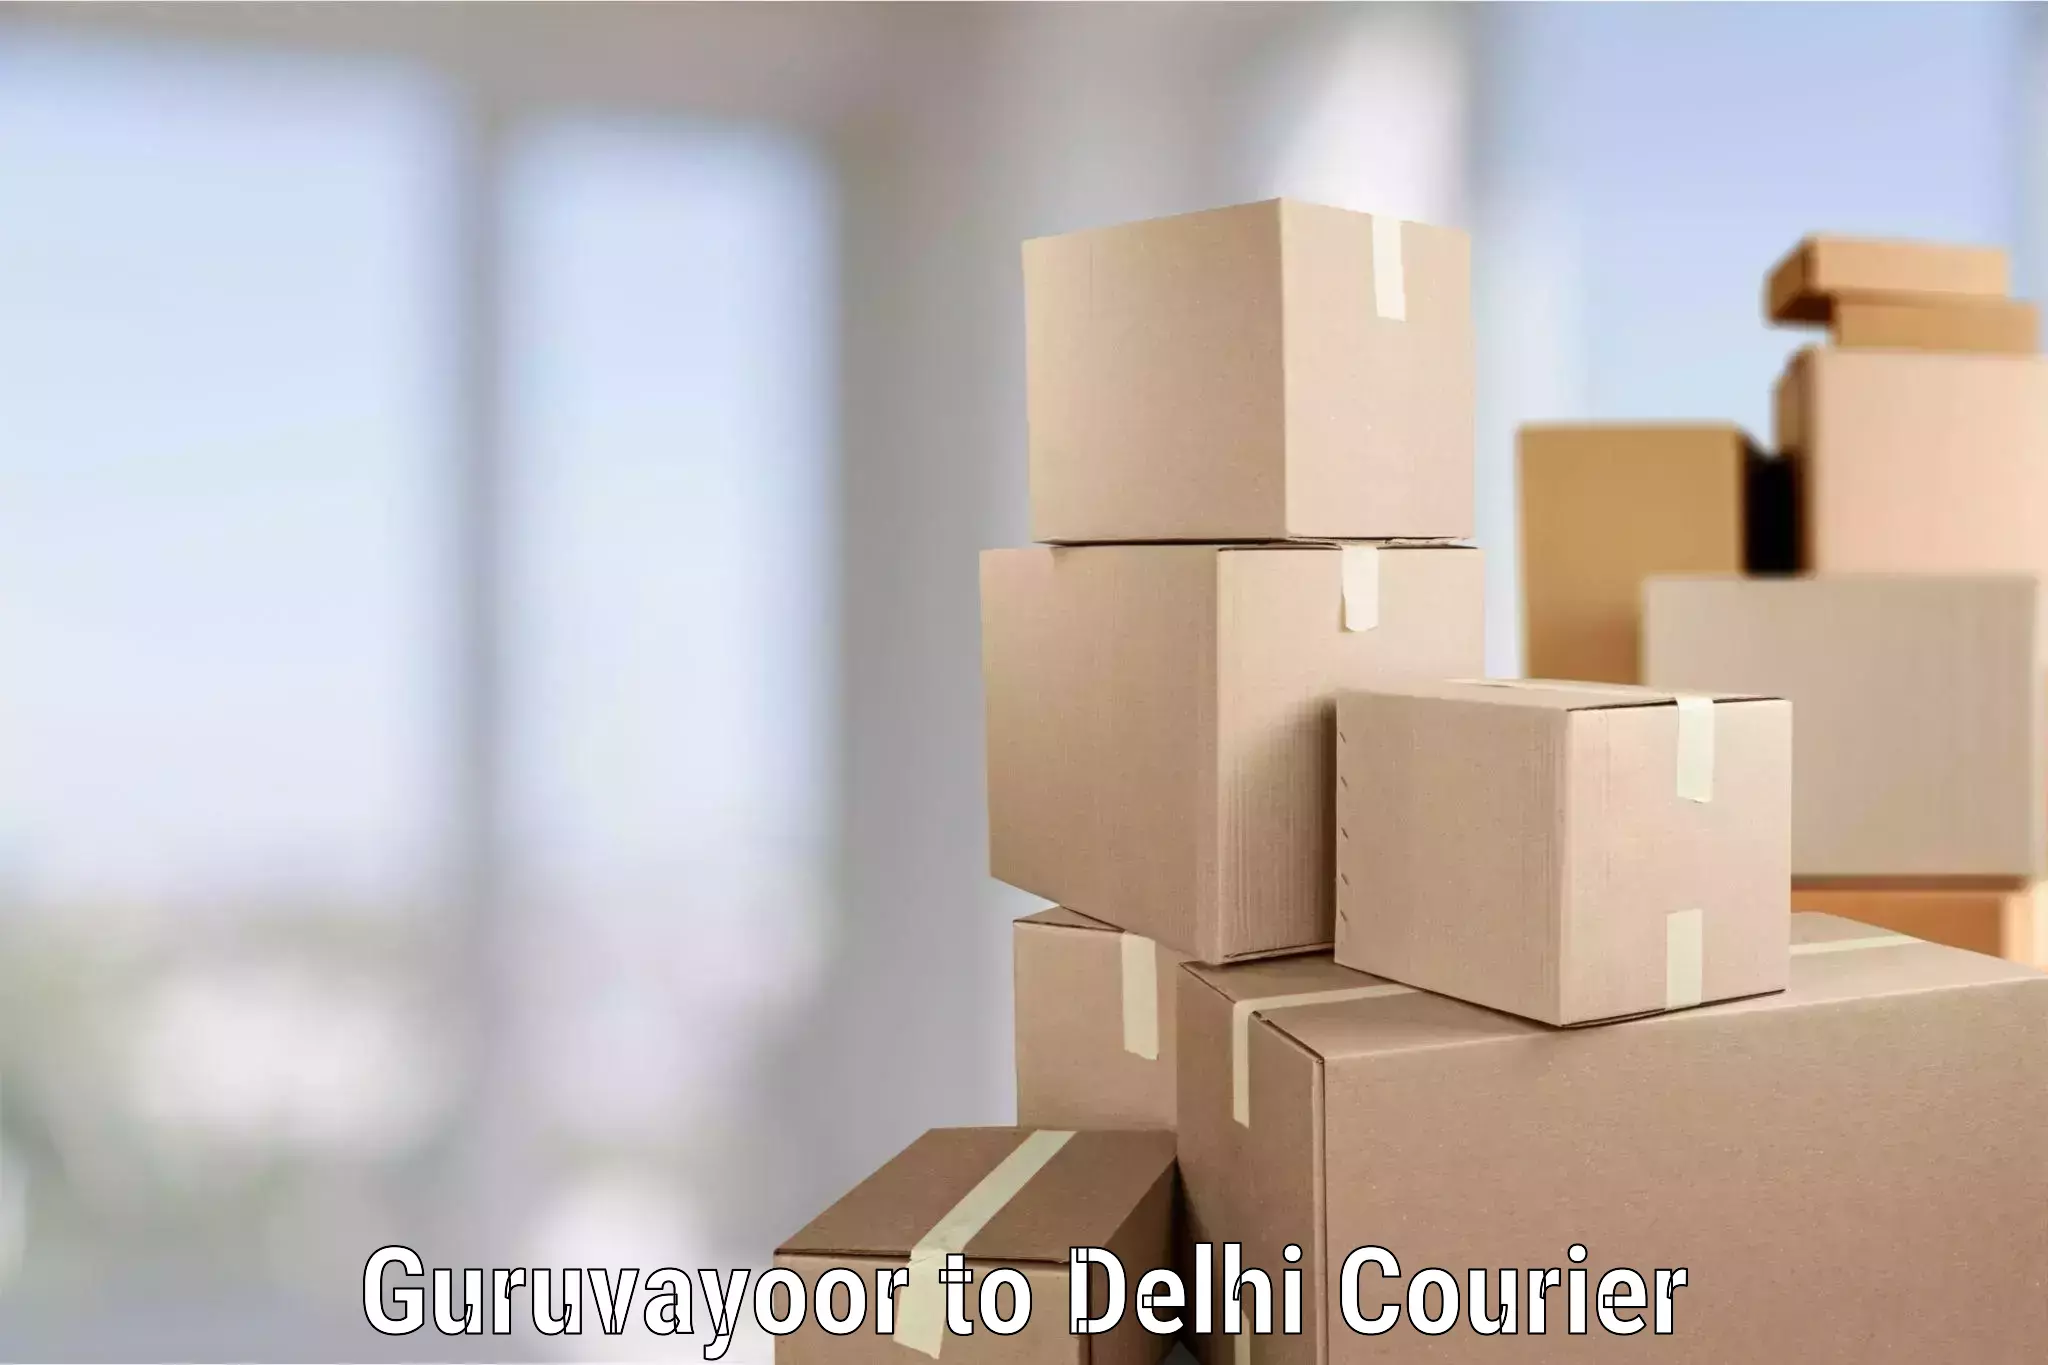 Furniture moving experts Guruvayoor to Delhi